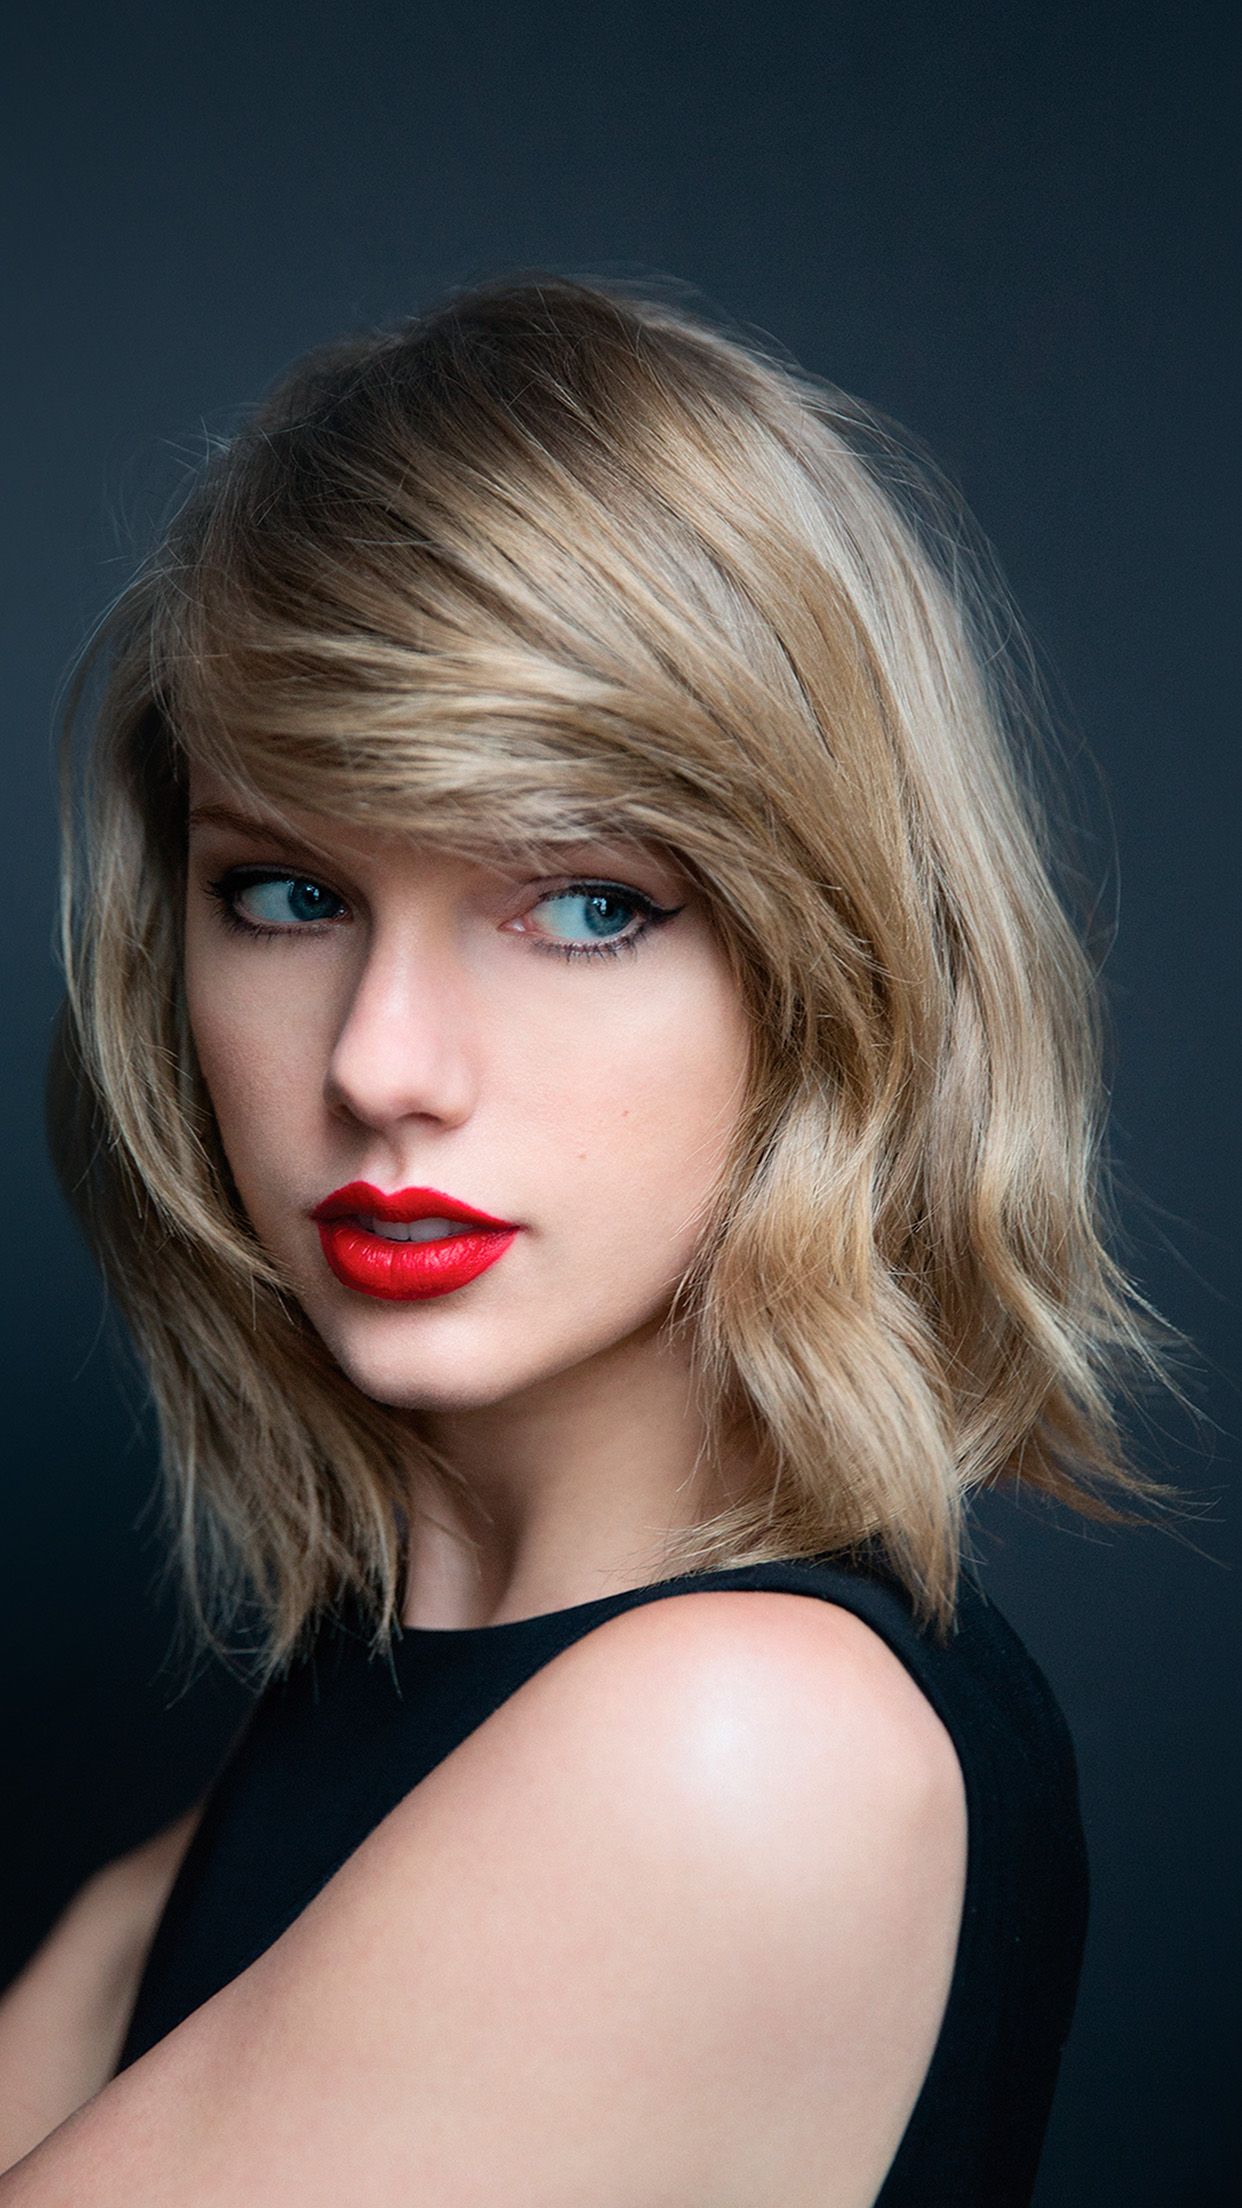 Taylor Swift Artist Celebrity Girl Wallpaper